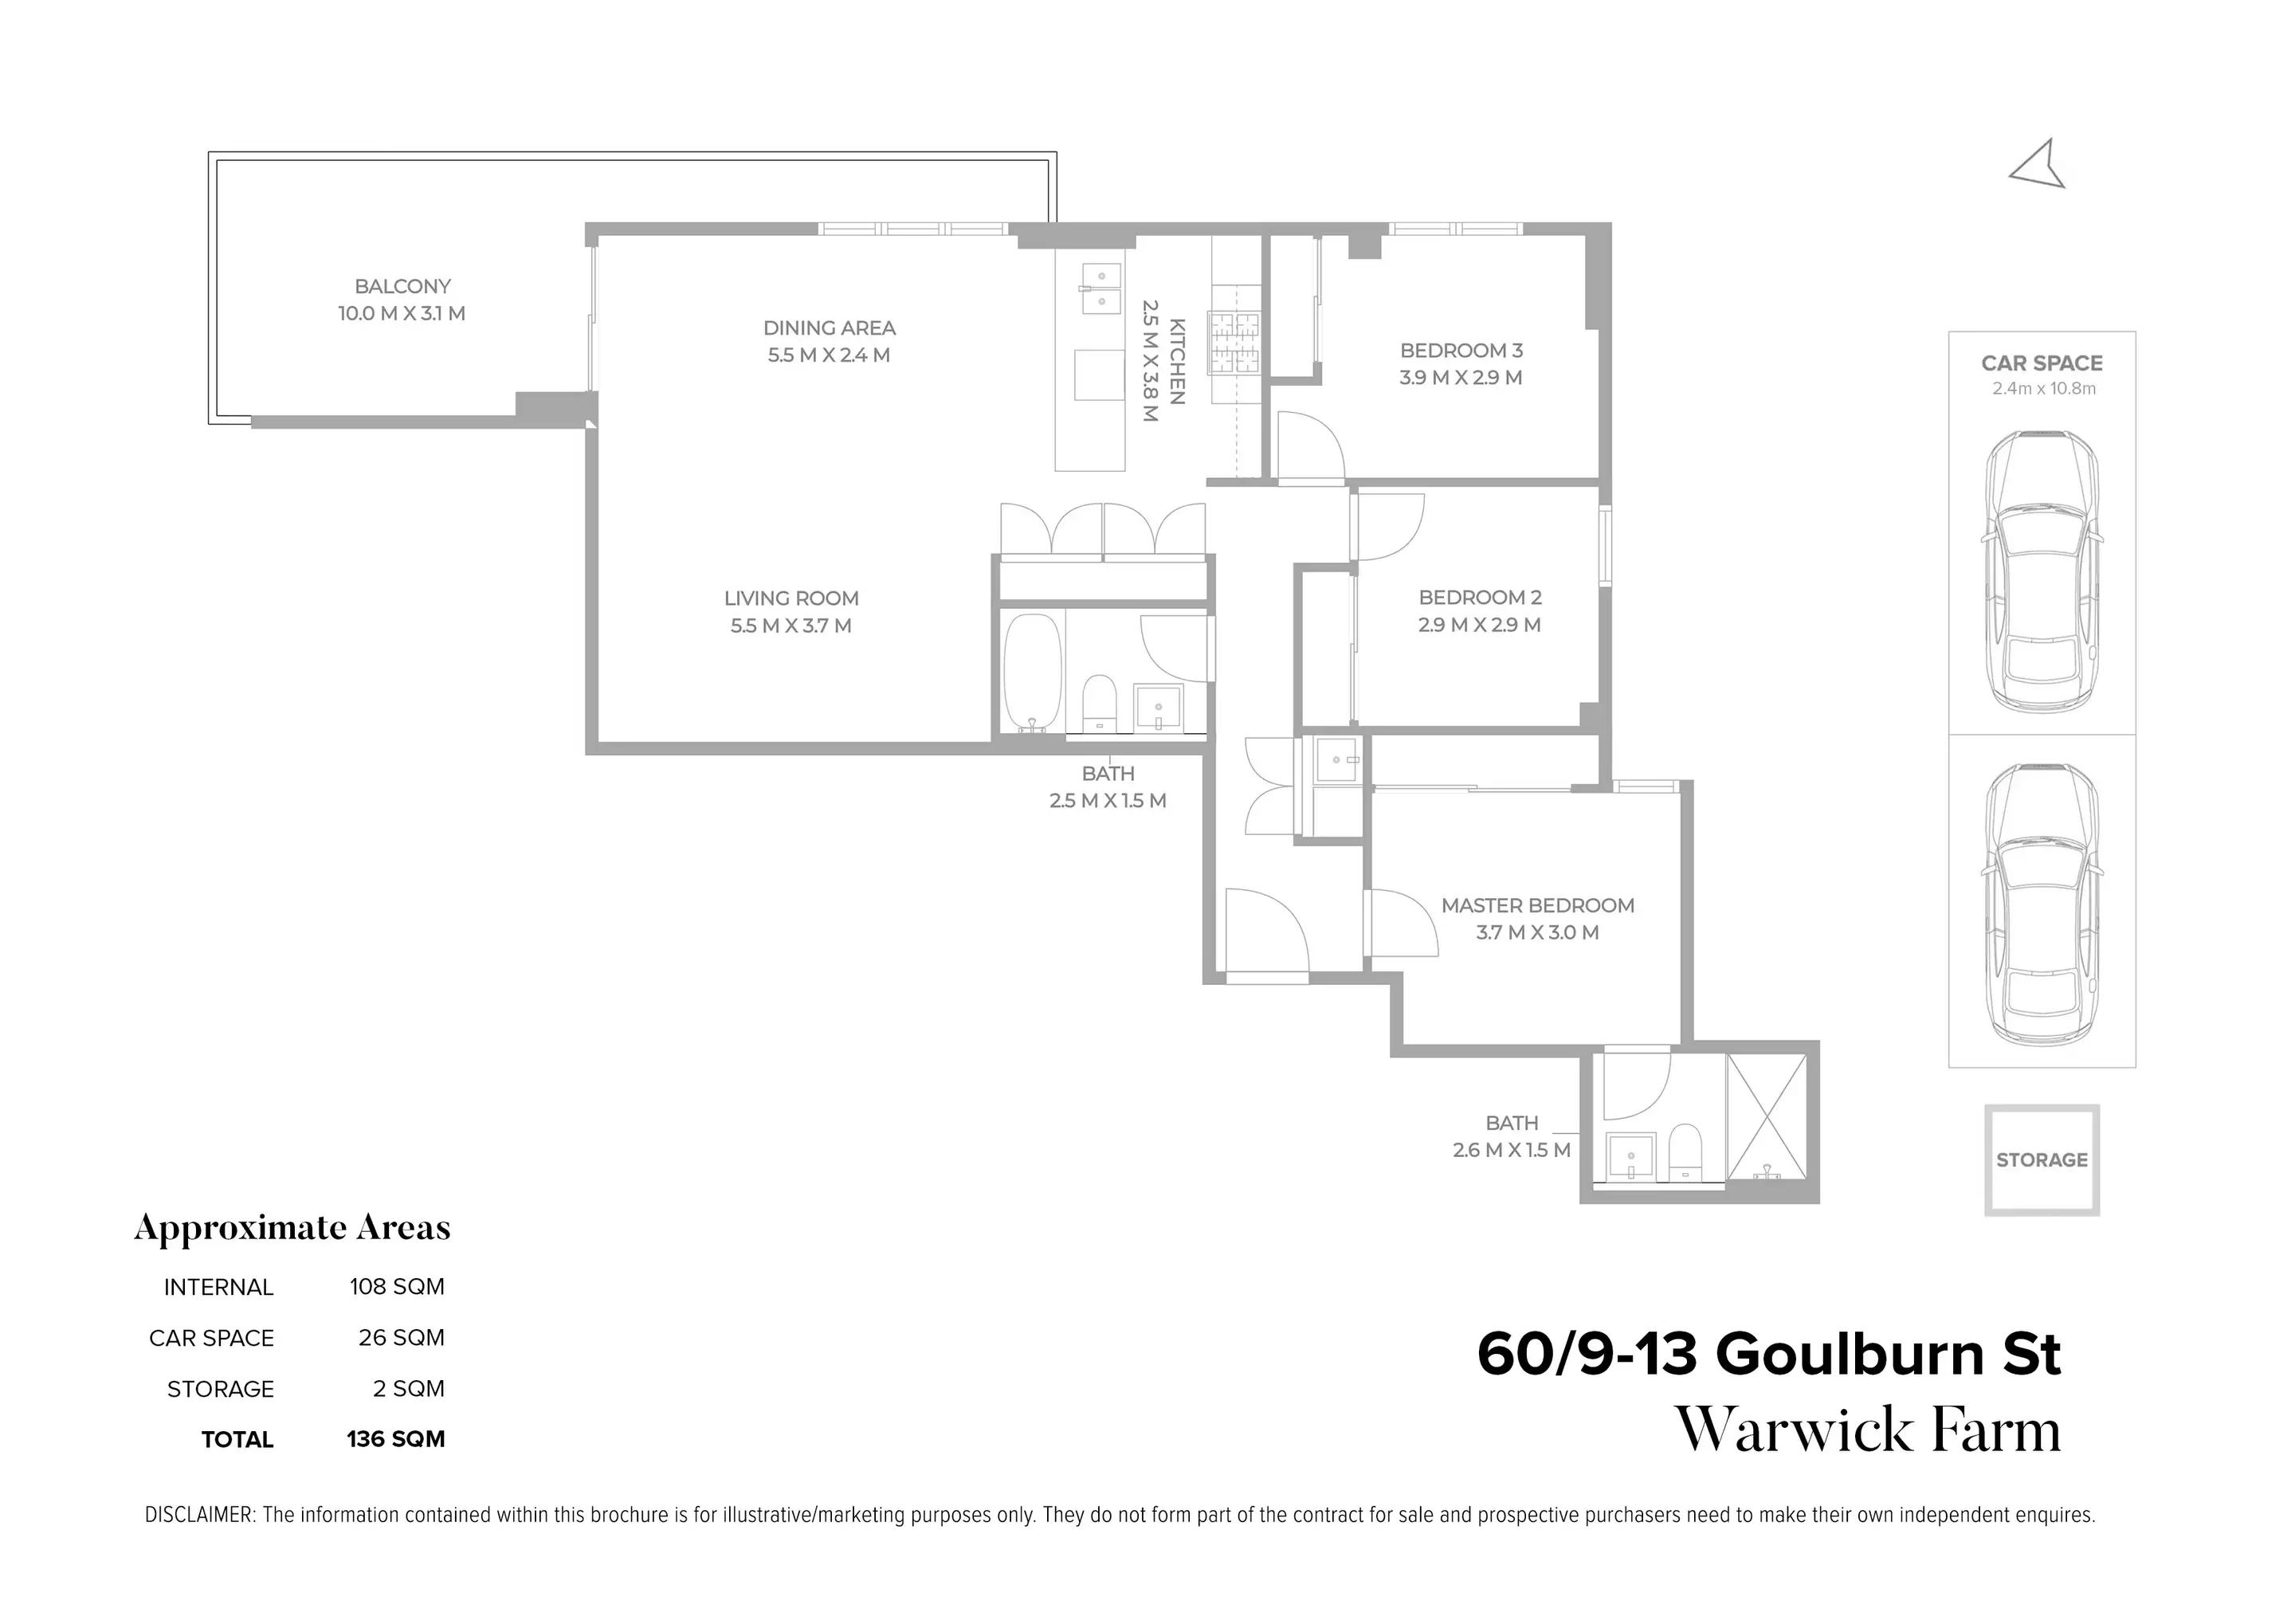 60/9-13 Goulburn Street, Warwick Farm Sold by Chidiac Realty - floorplan